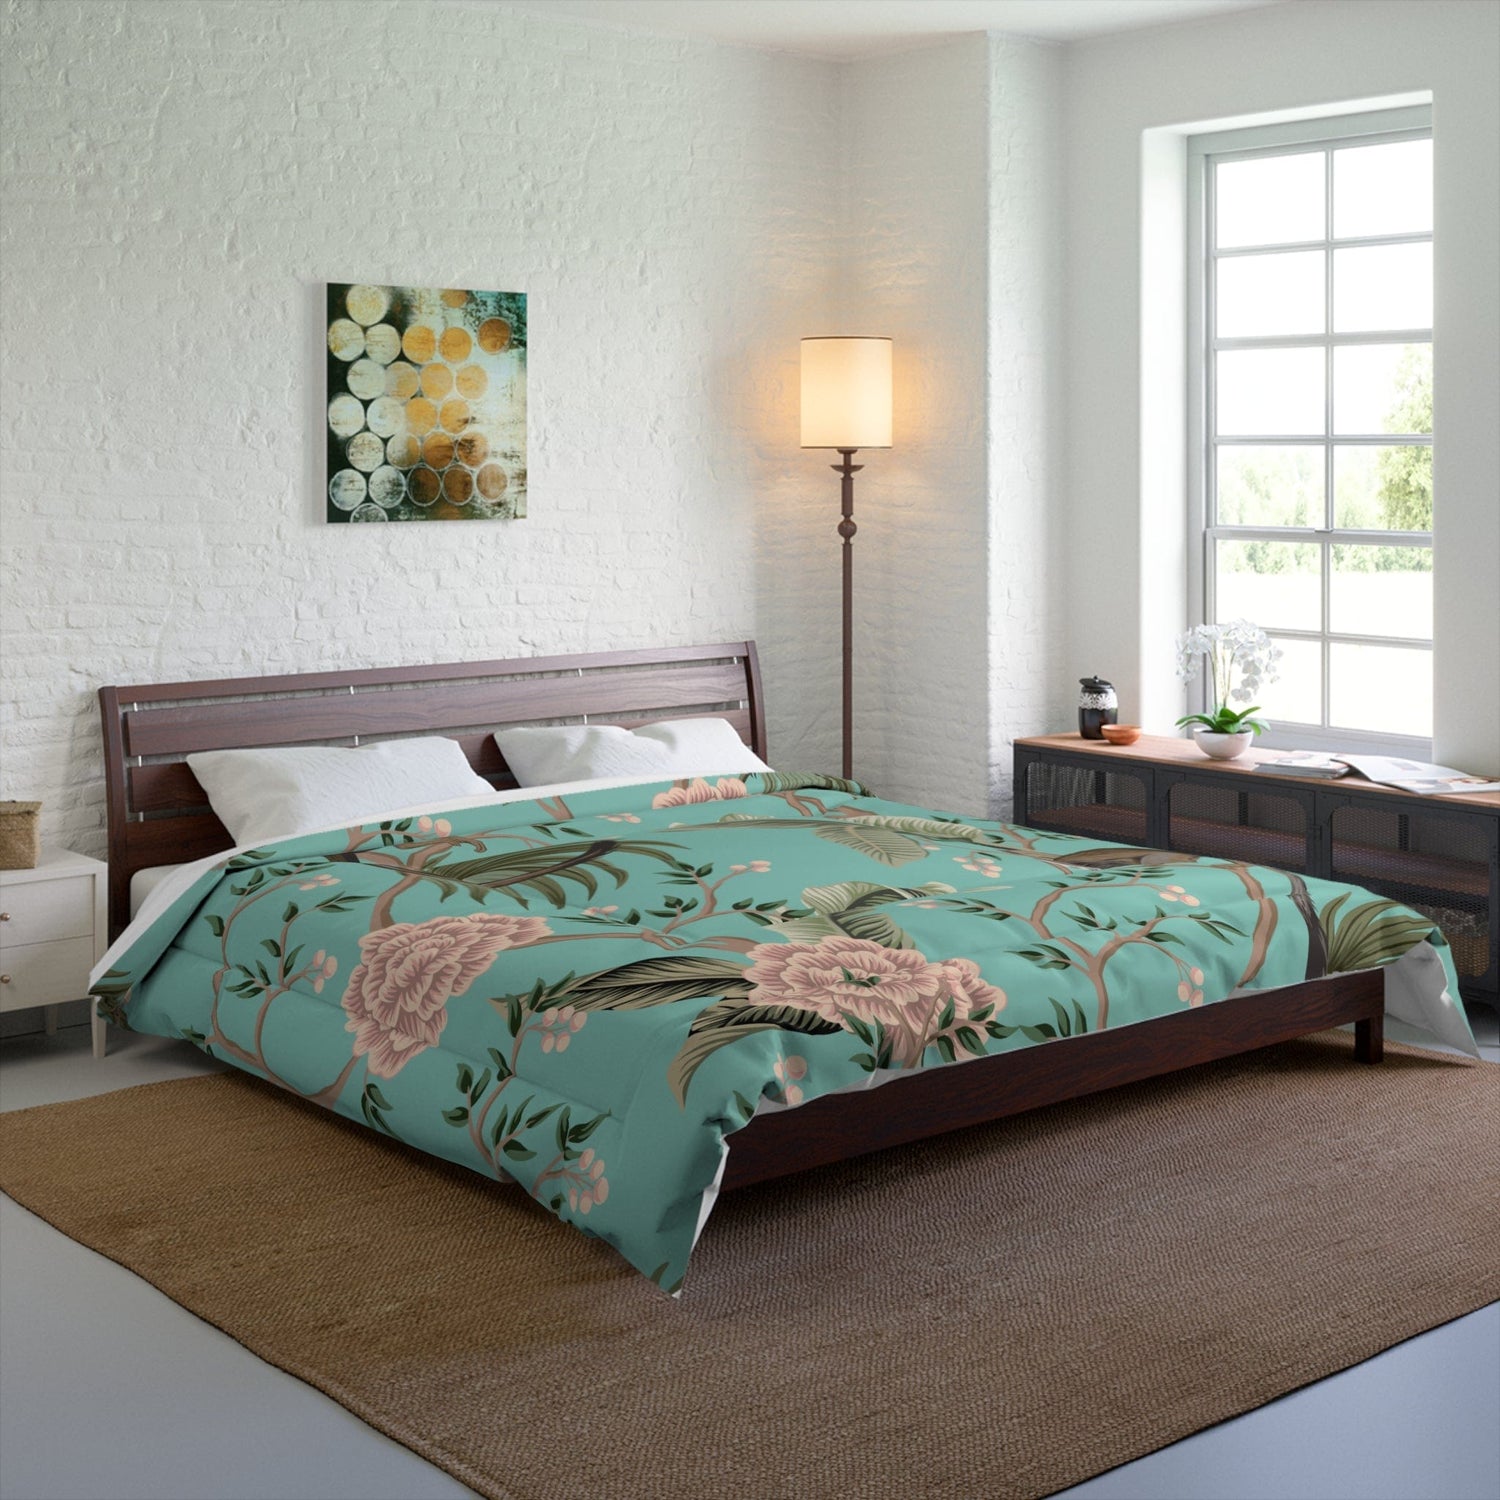 Kate McEnroe New York Chinoiserie Monkey Floral Comforter, Teal Pink Botanical BeddingComforters11966184077994319046